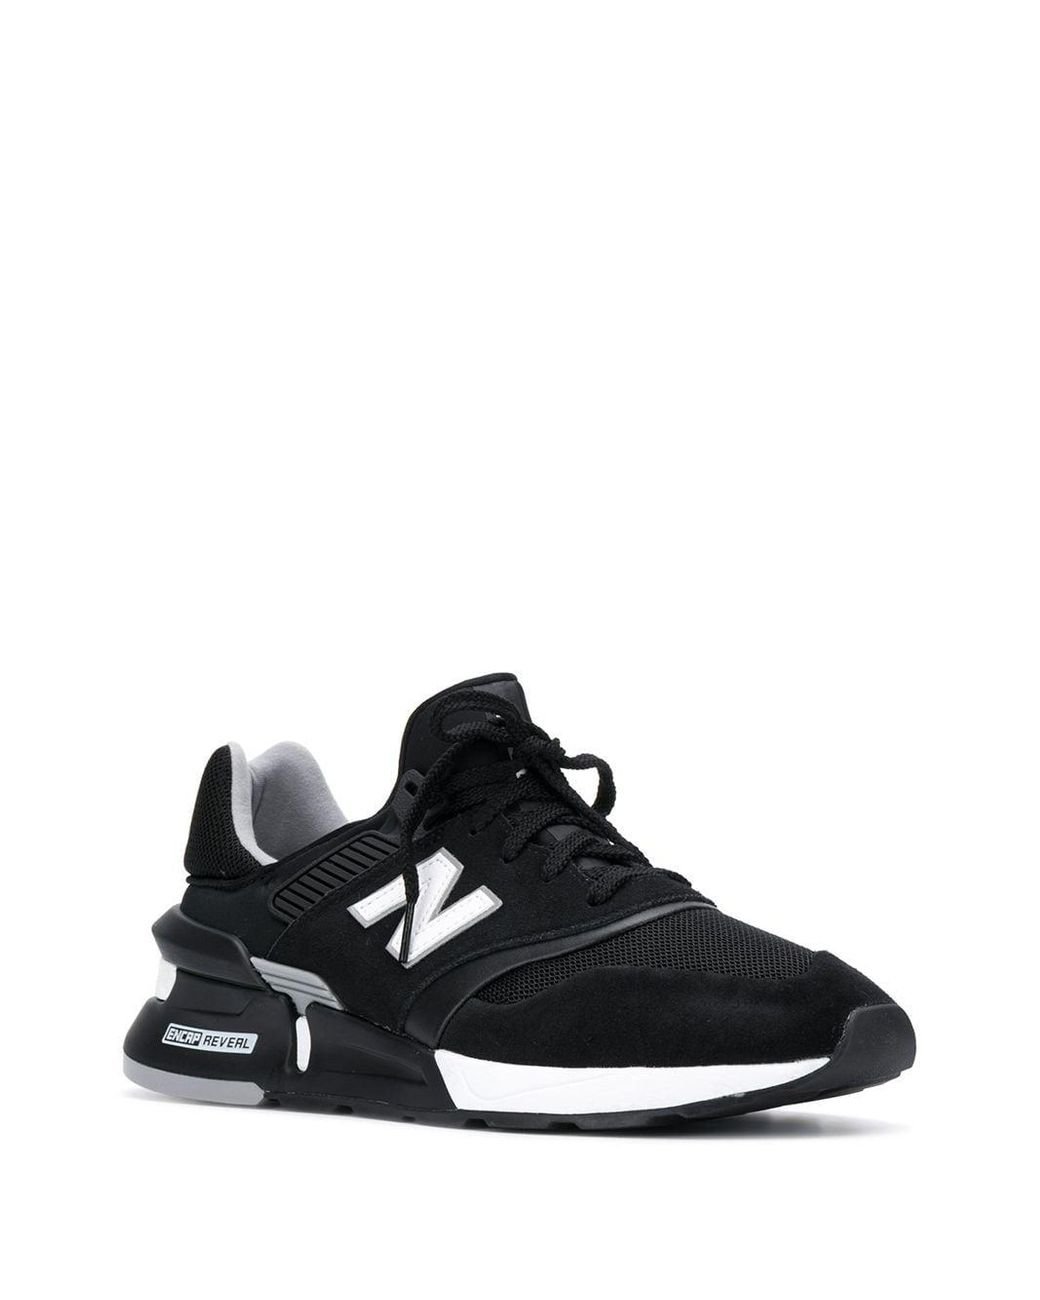 New Balance 997 Encap Reveal Sneakers in Black for Men | Lyst